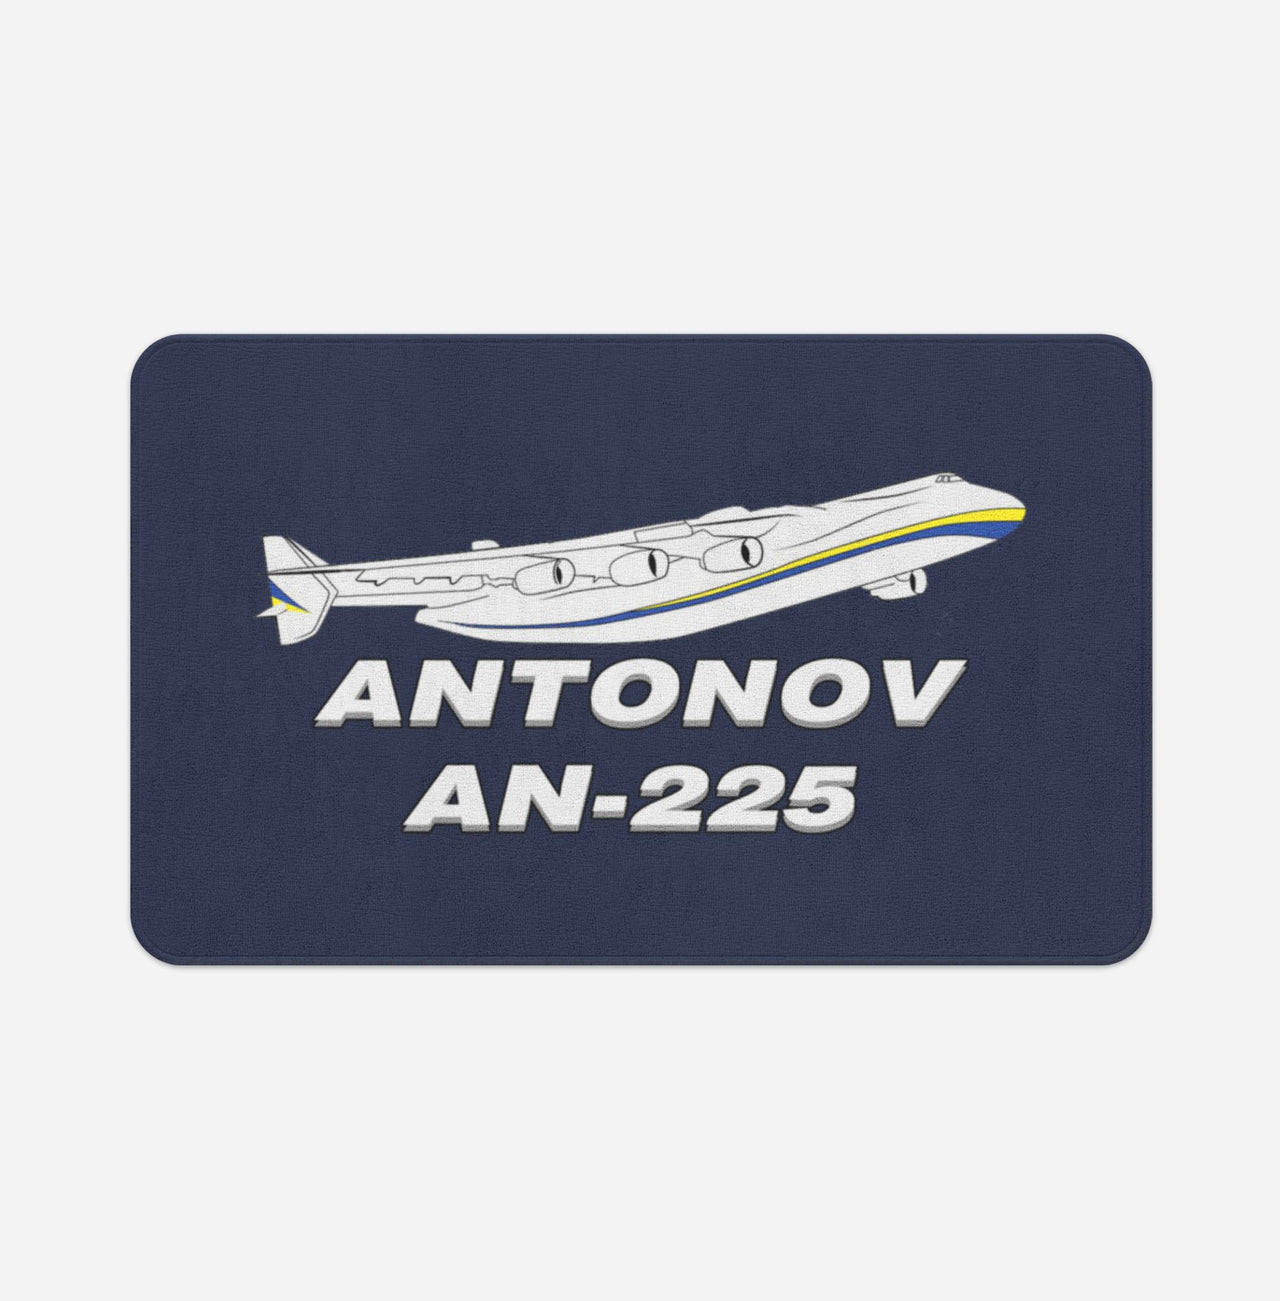 Antonov AN-225 (27) Designed Bath Mats